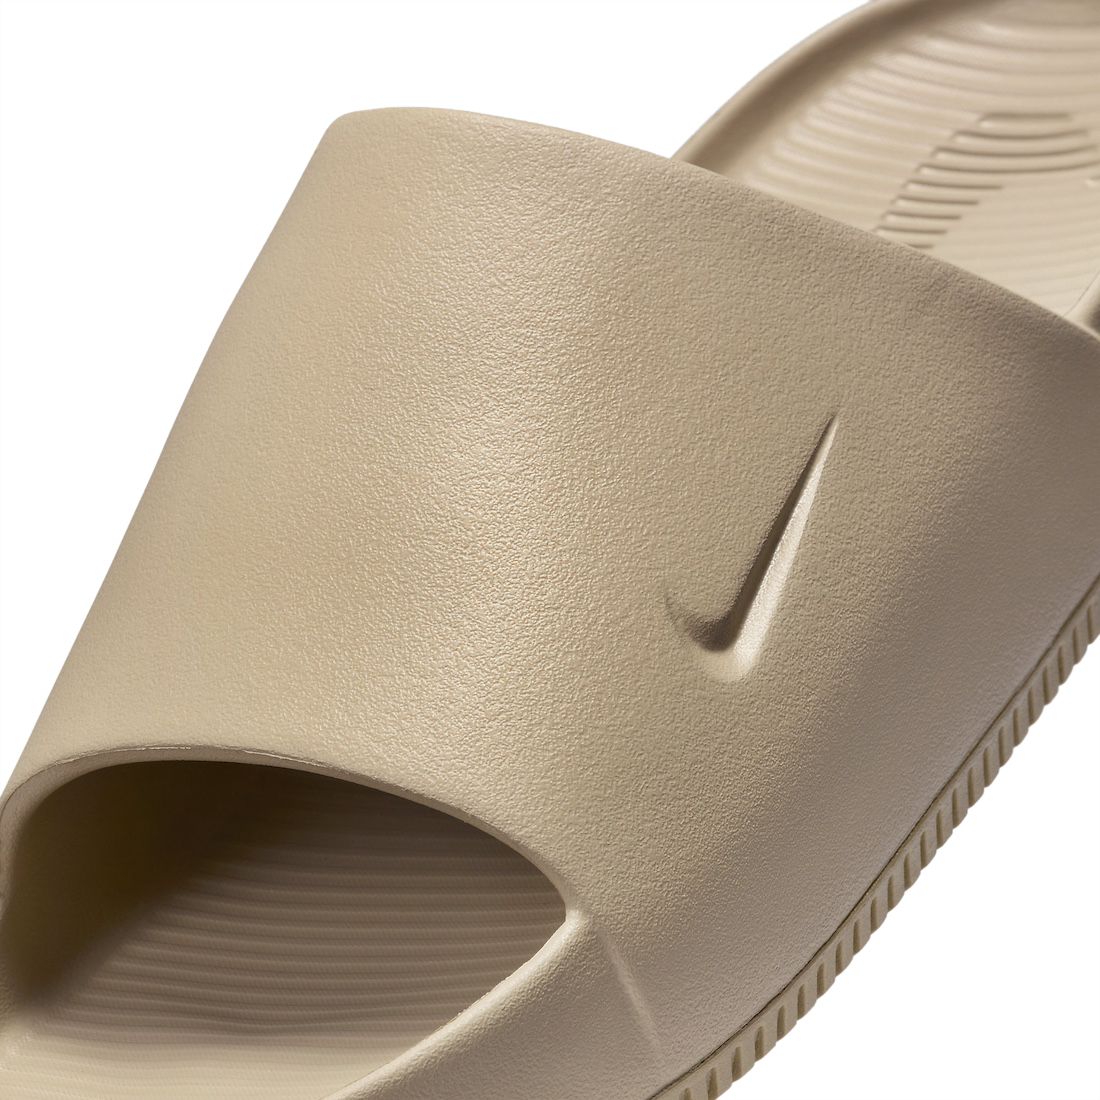 Nike Calm Slide Khaki FD4116-201 - KicksOnFire.com